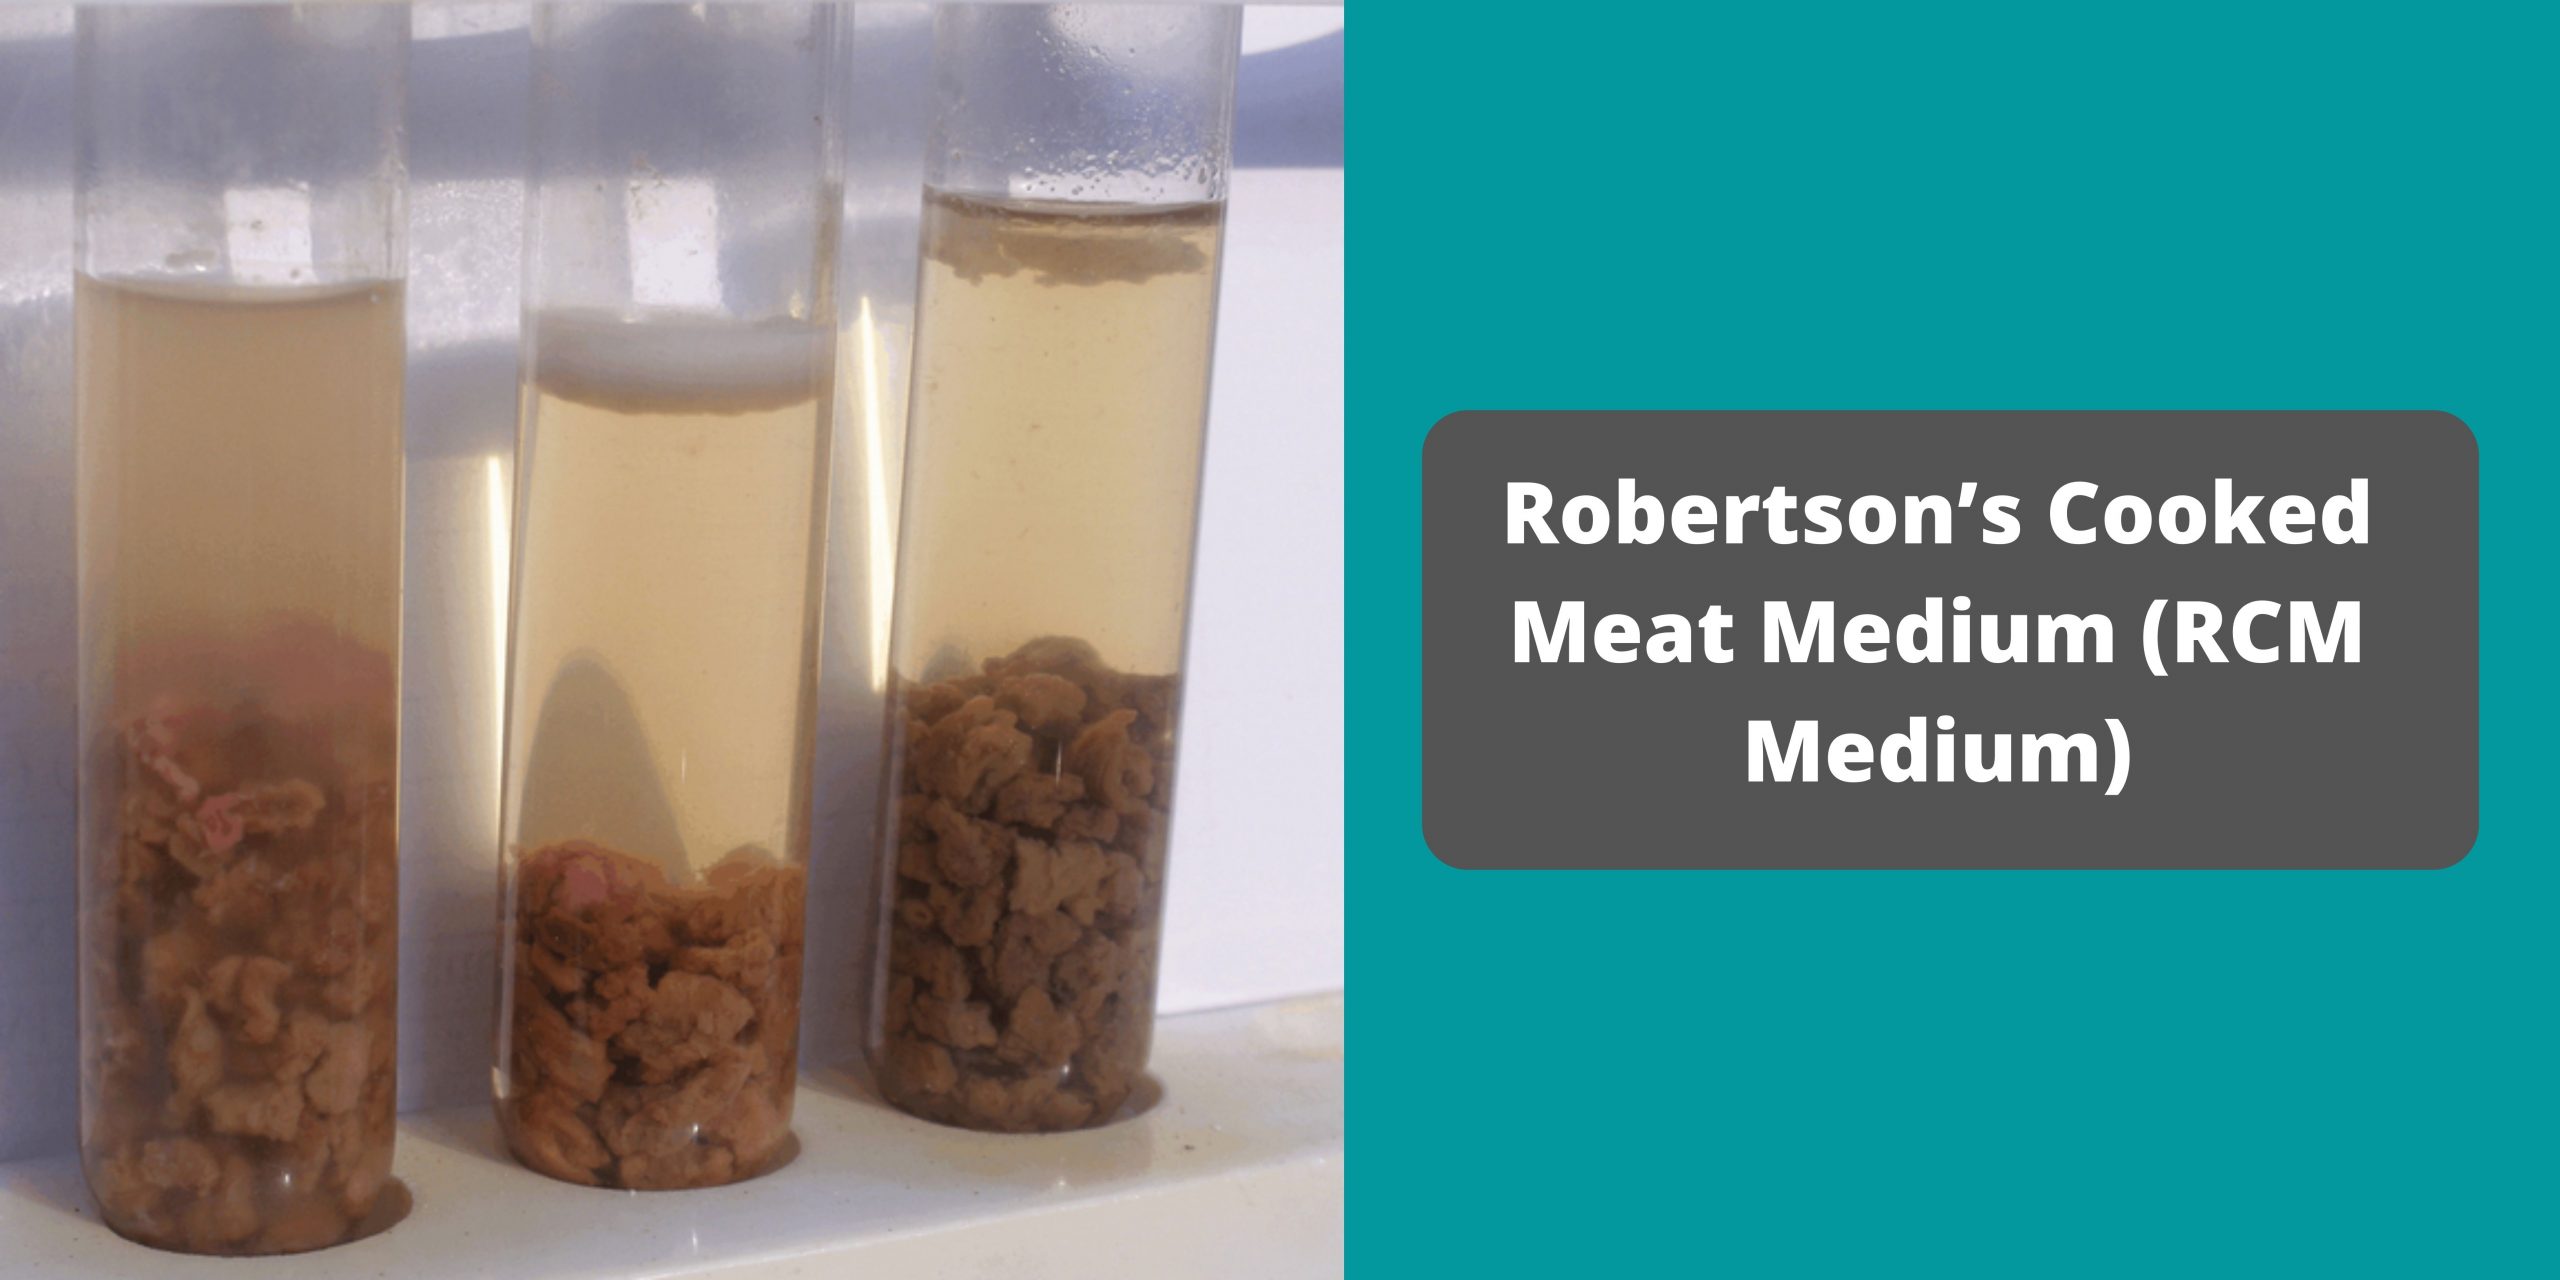 Robertson’s Cooked Meat Medium (RCM Medium) Preparation, Composition.